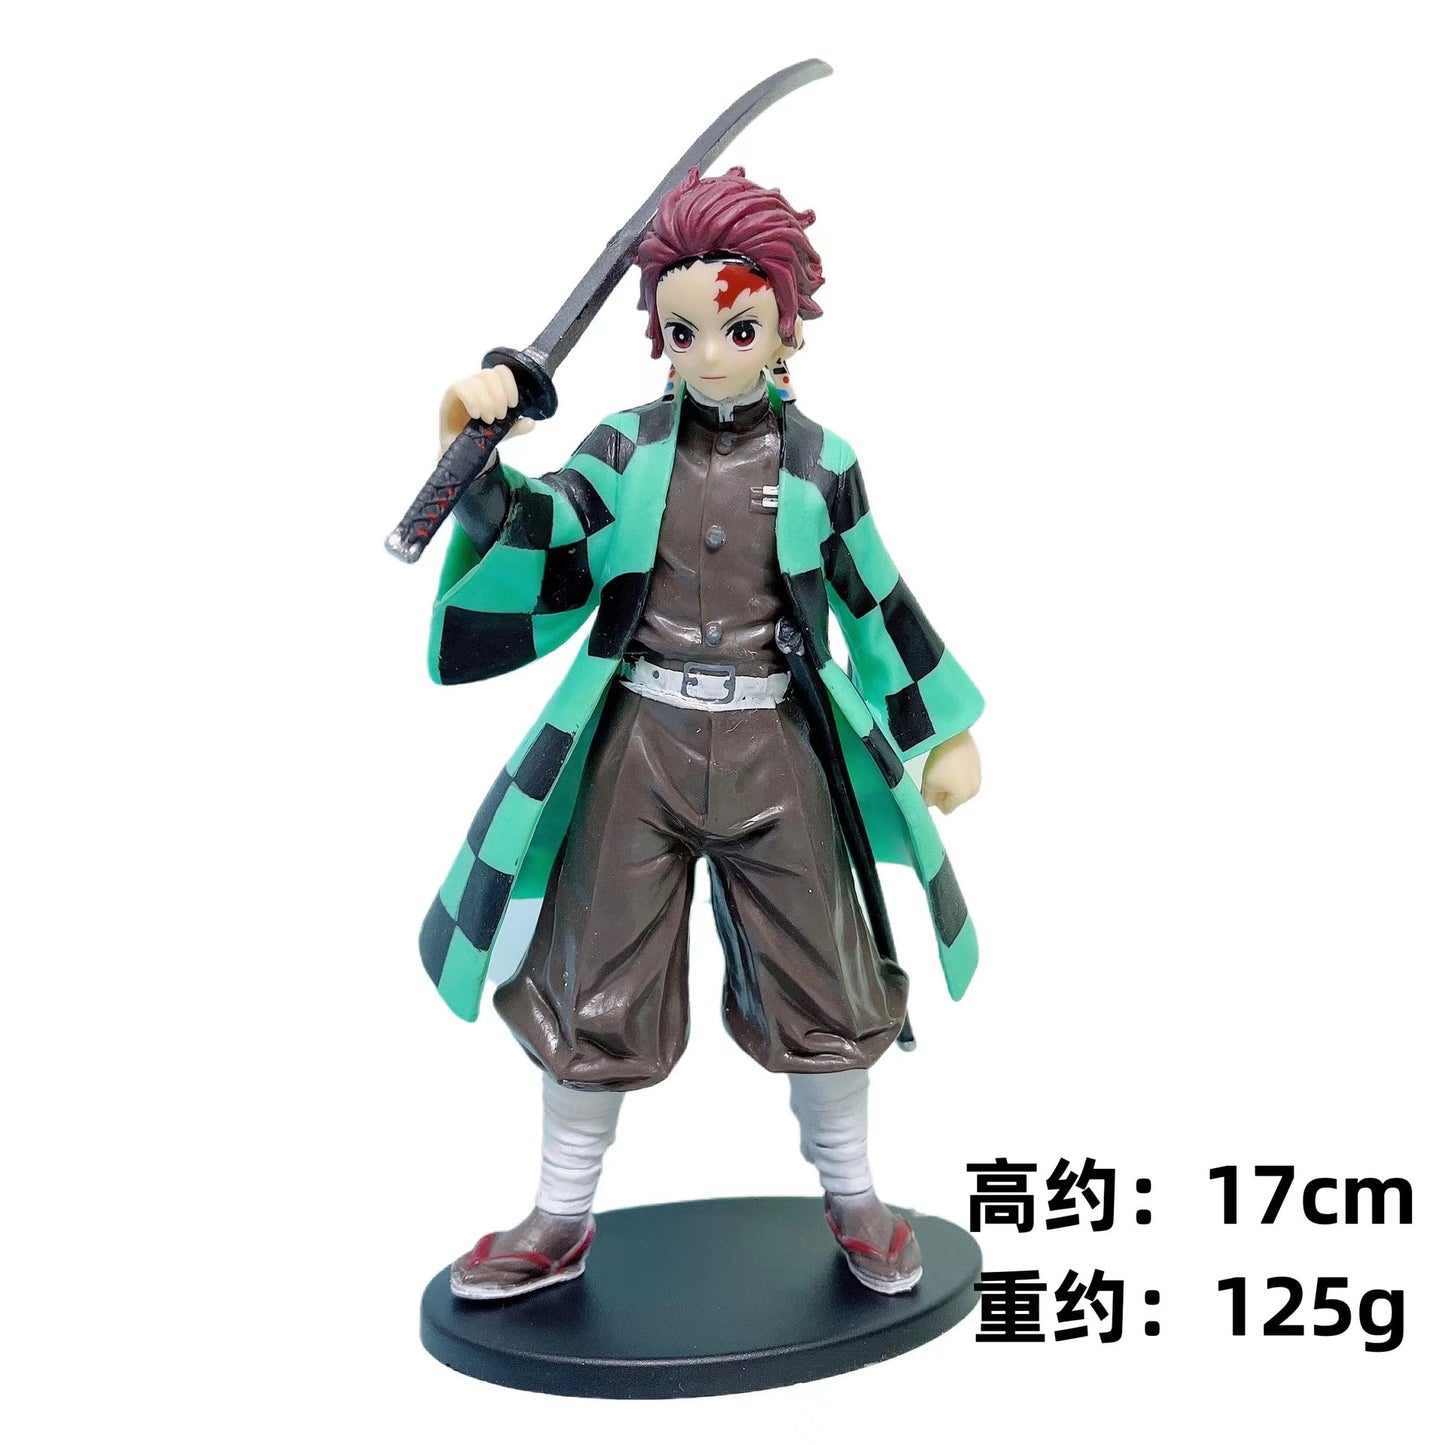 Demon Slayer Anime Figure 17cm With Retail Box